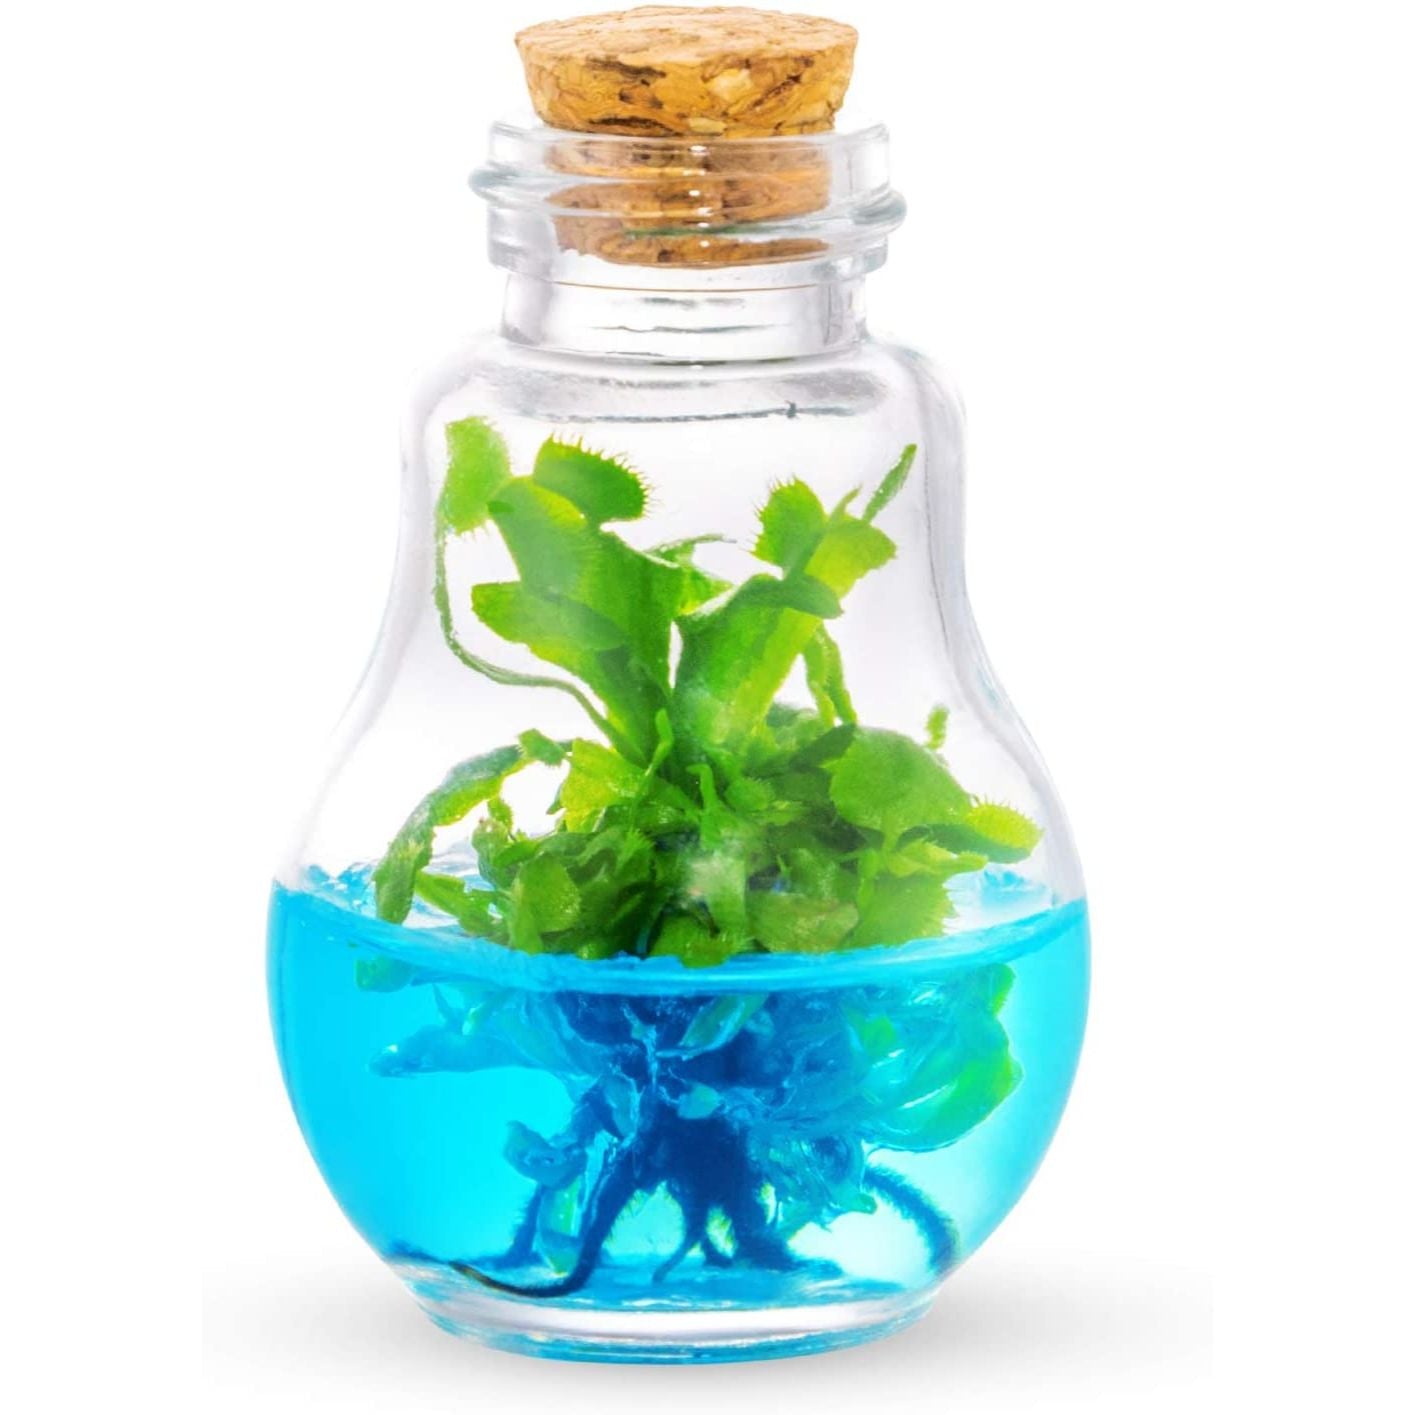 A Venus flytrap in a light bulb shaped self containing terrarium immersed in blue liquid.